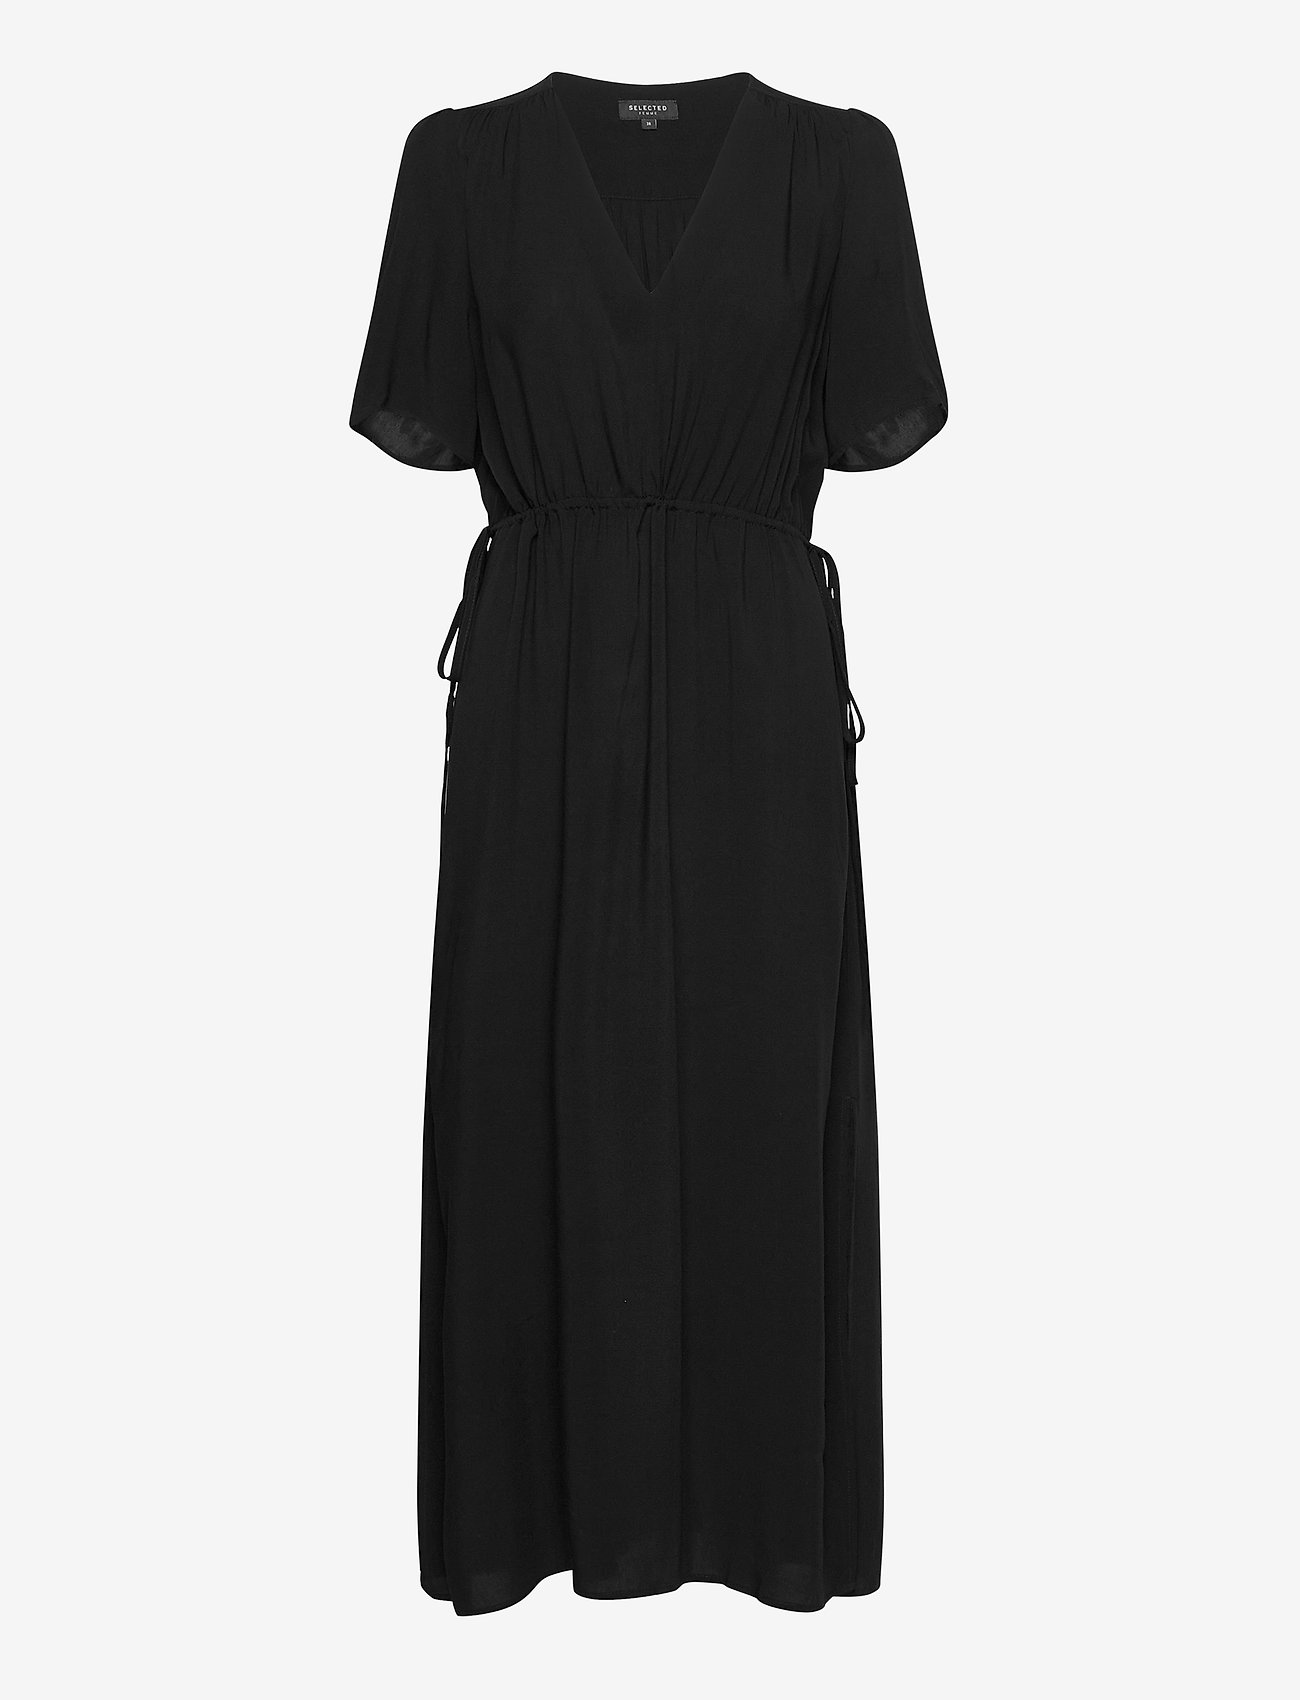 Slfwynona-damina 2/4 Ankle Slit Dress (Black) (58.49 €) - Selected ...